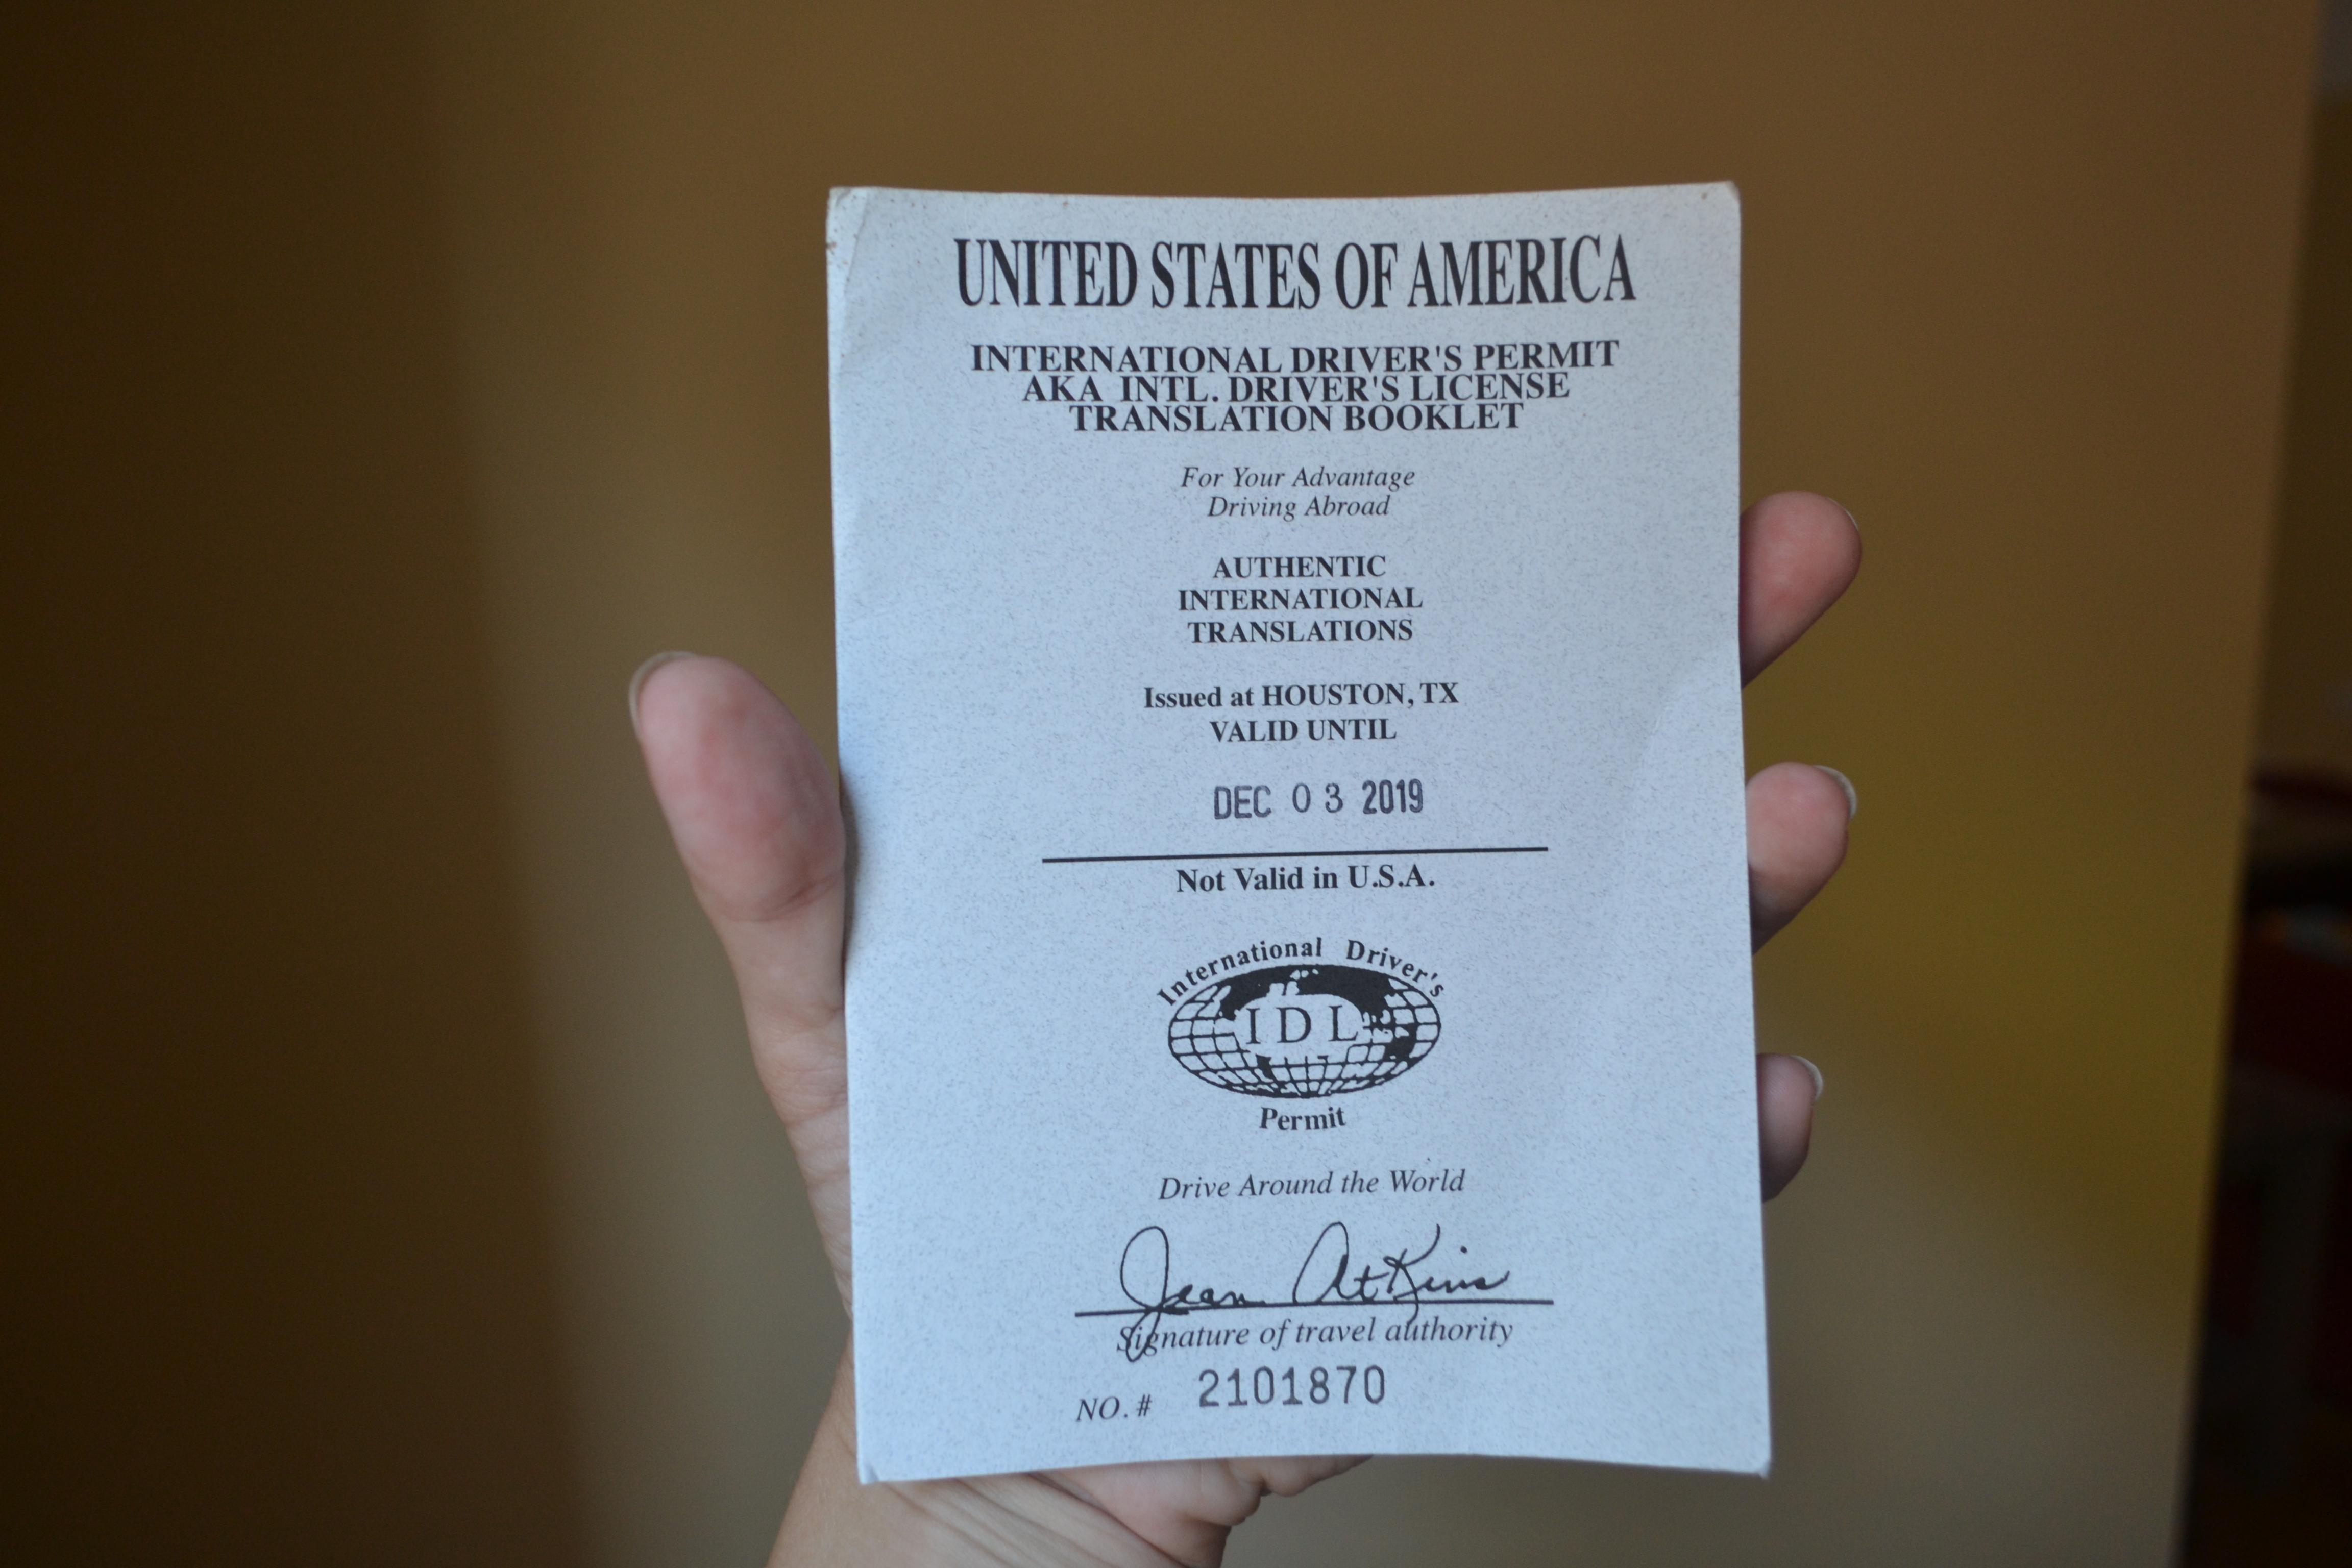 My International Driver's License (IDL)